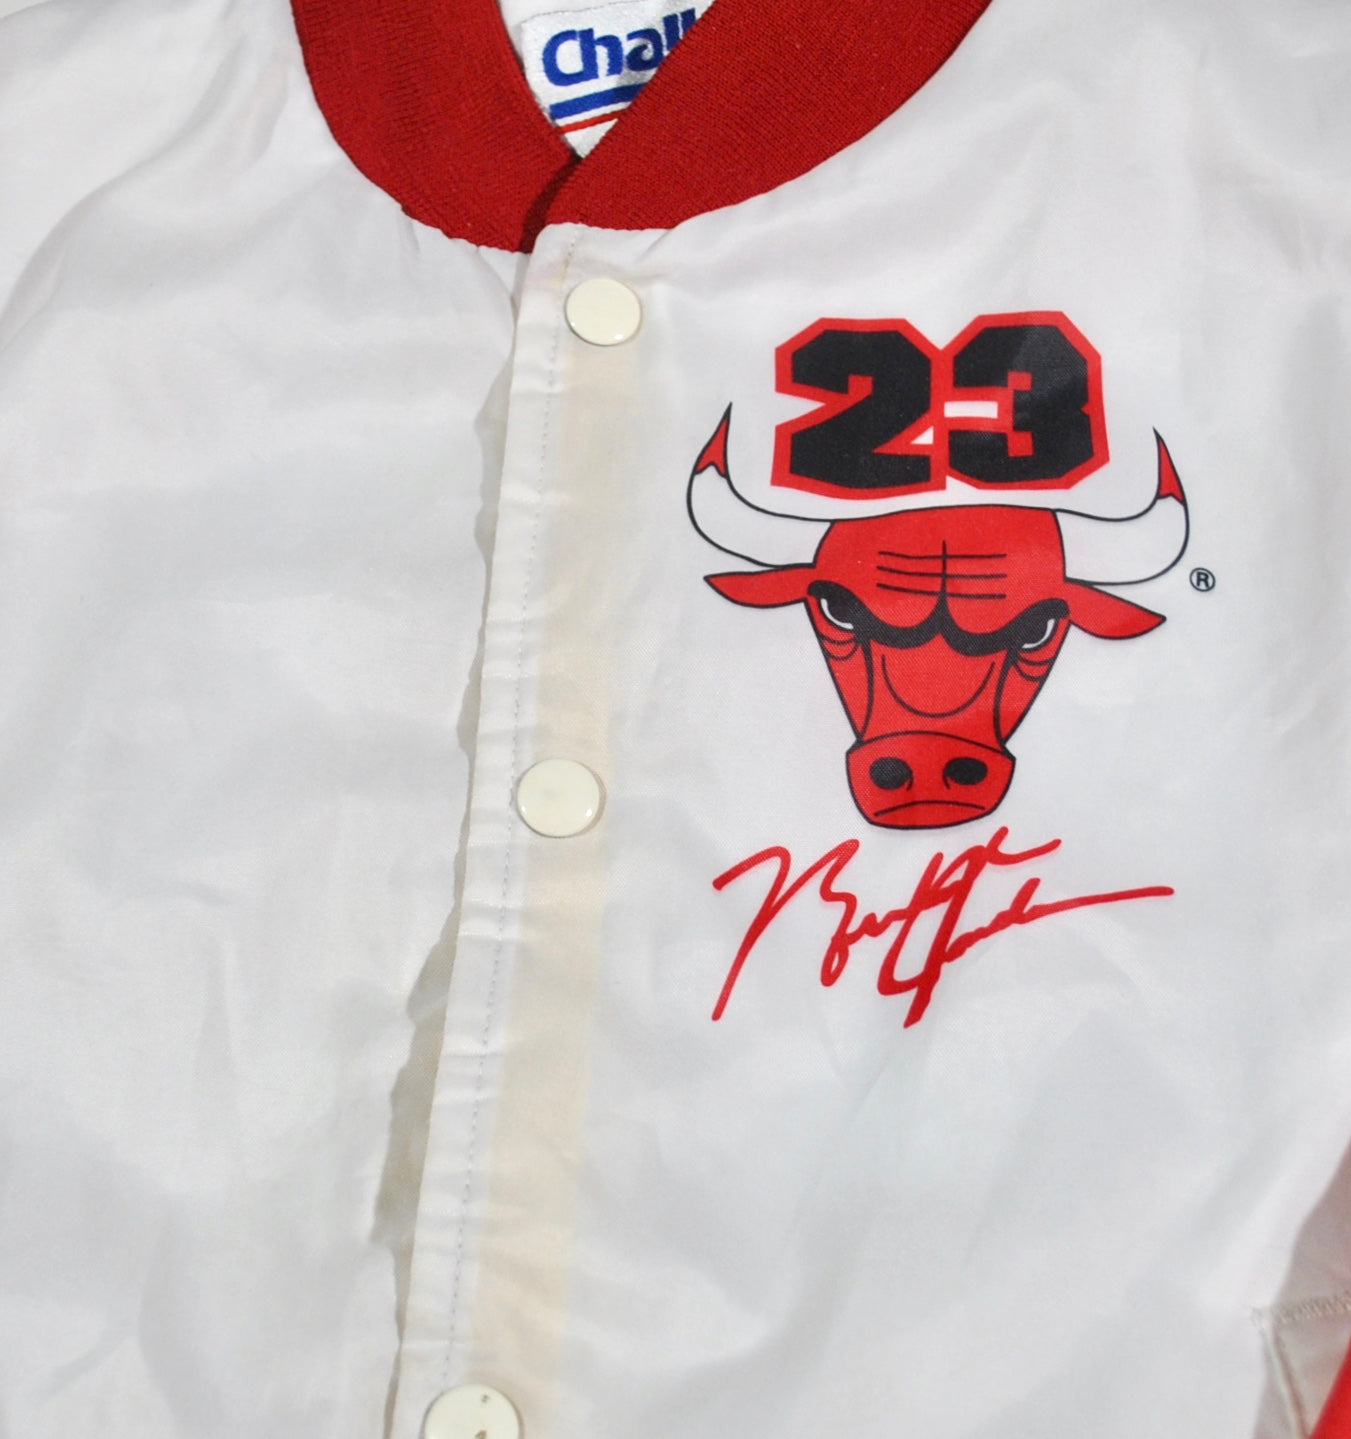 Vintage Chicago Bulls Authentic Warm Up Champion Jacket Jordan